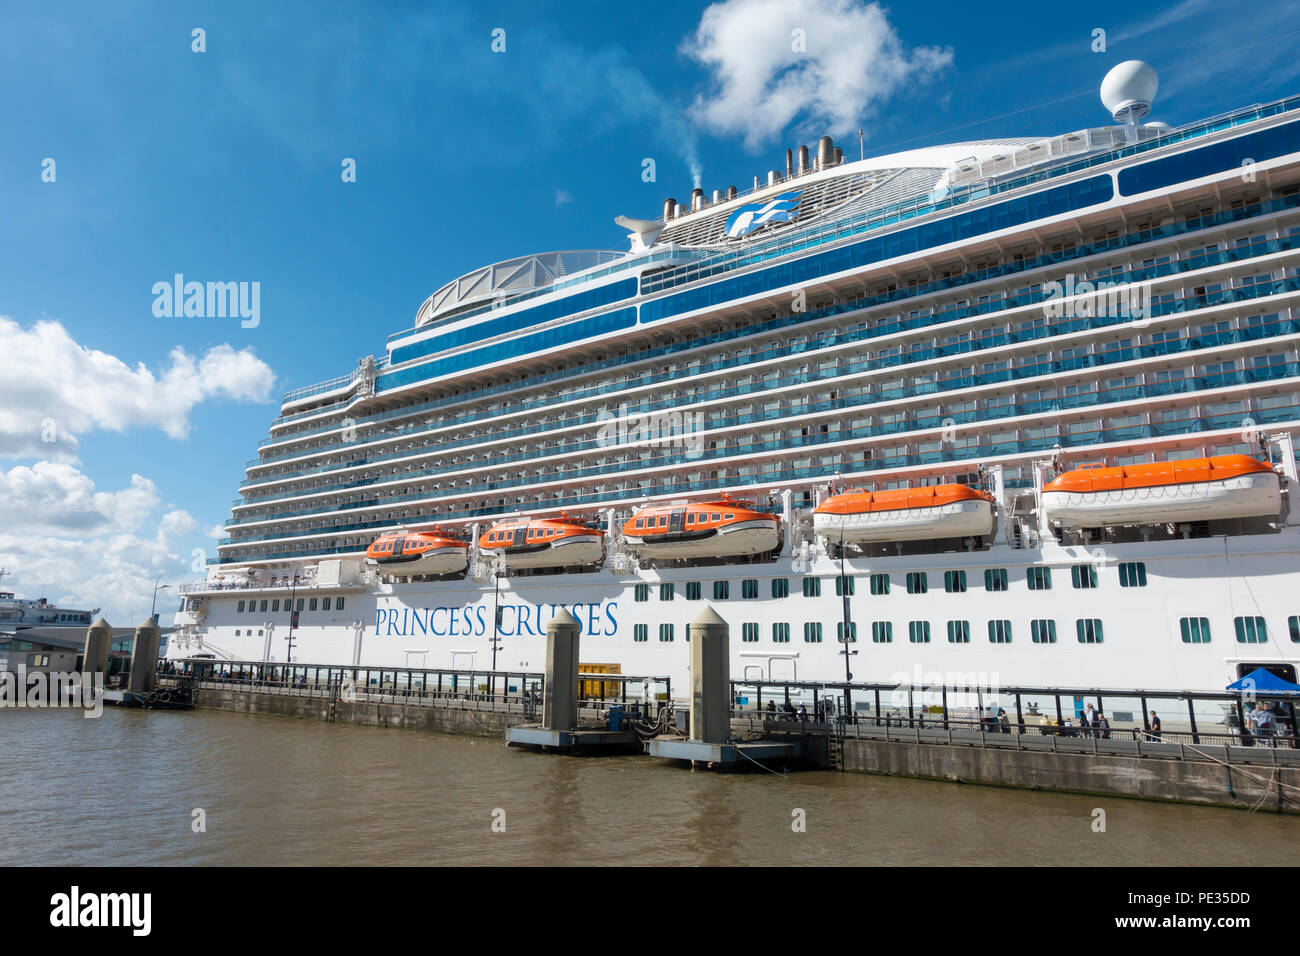 Royal Princess Cruise nave ormeggiata a Liverpool Foto Stock